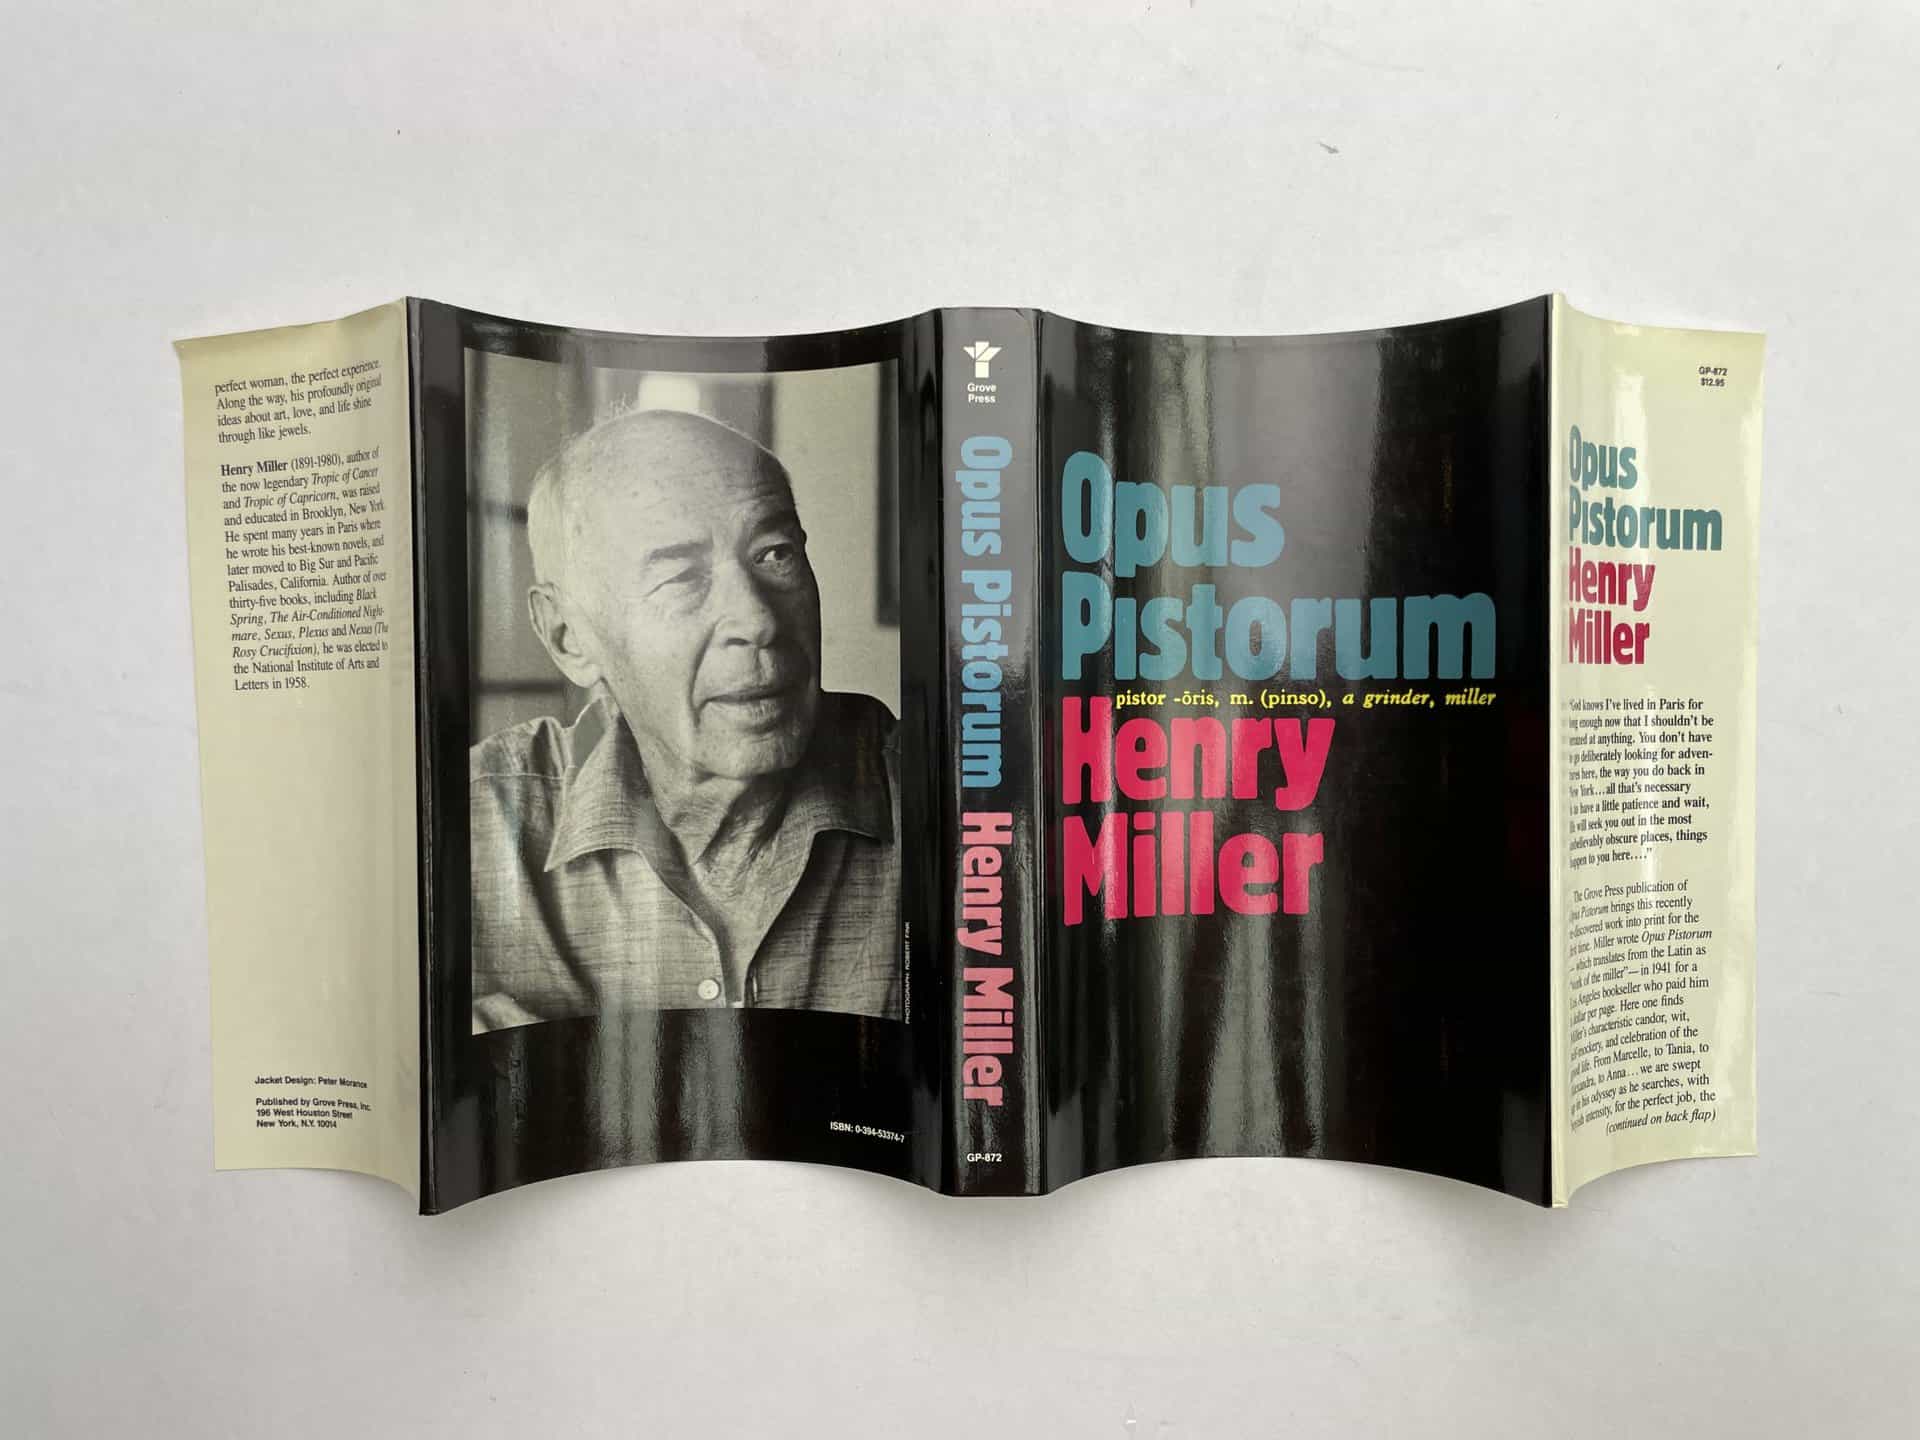 henry miller opus pistorum first edition4